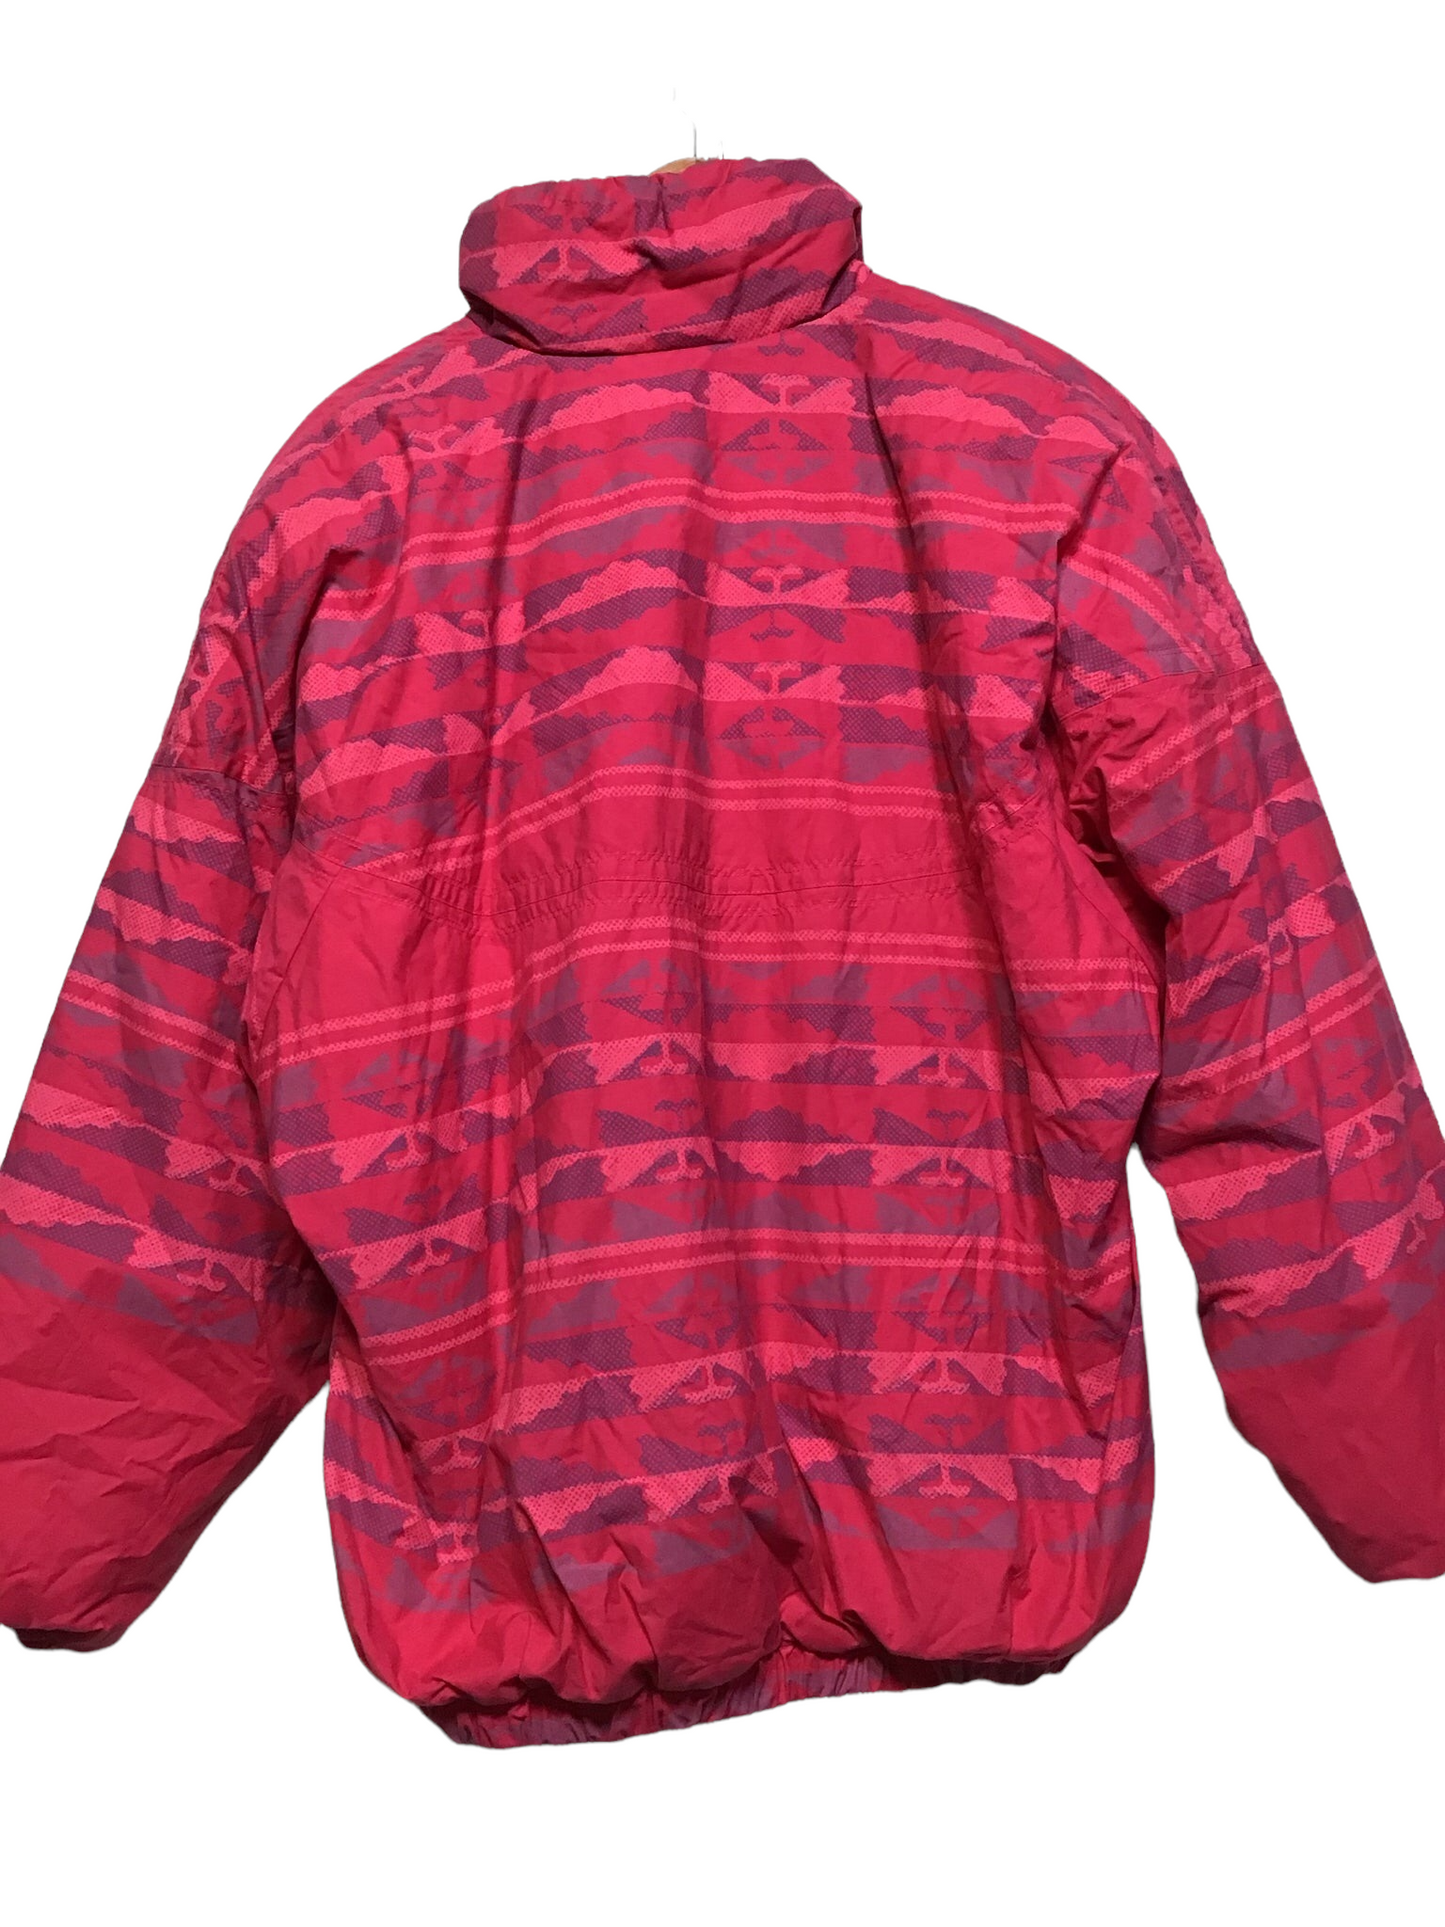 Inuit Ski Coat (Size L)